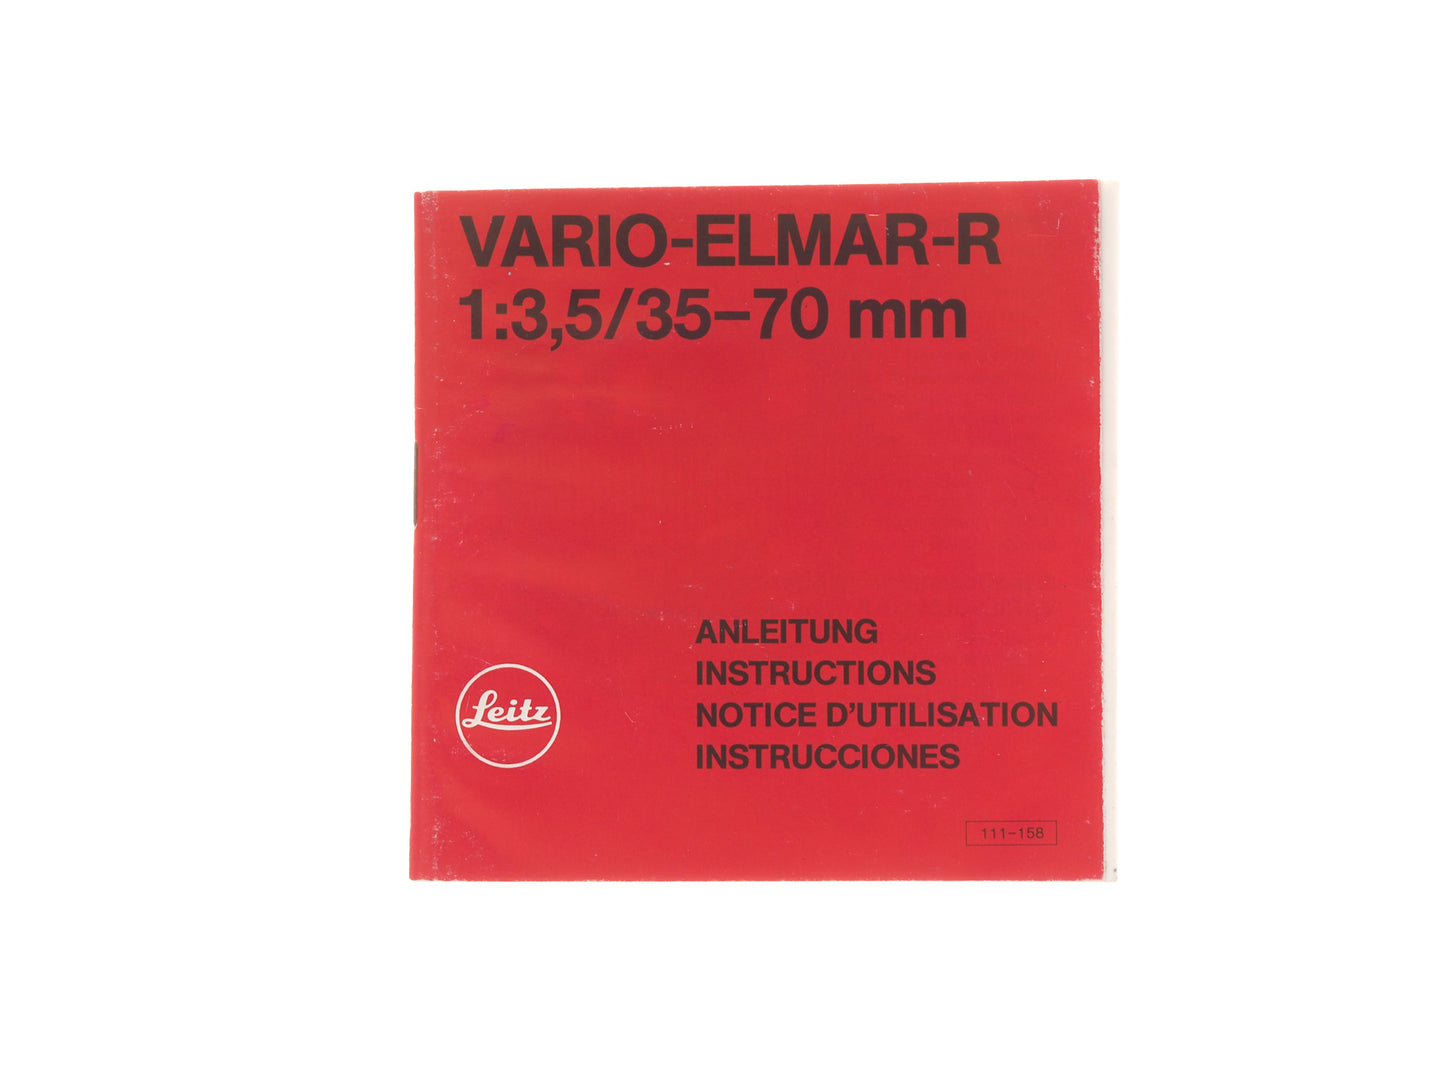 Leica Vario-Elmar-R f/3.5 35-70mm Instructions - Accessory